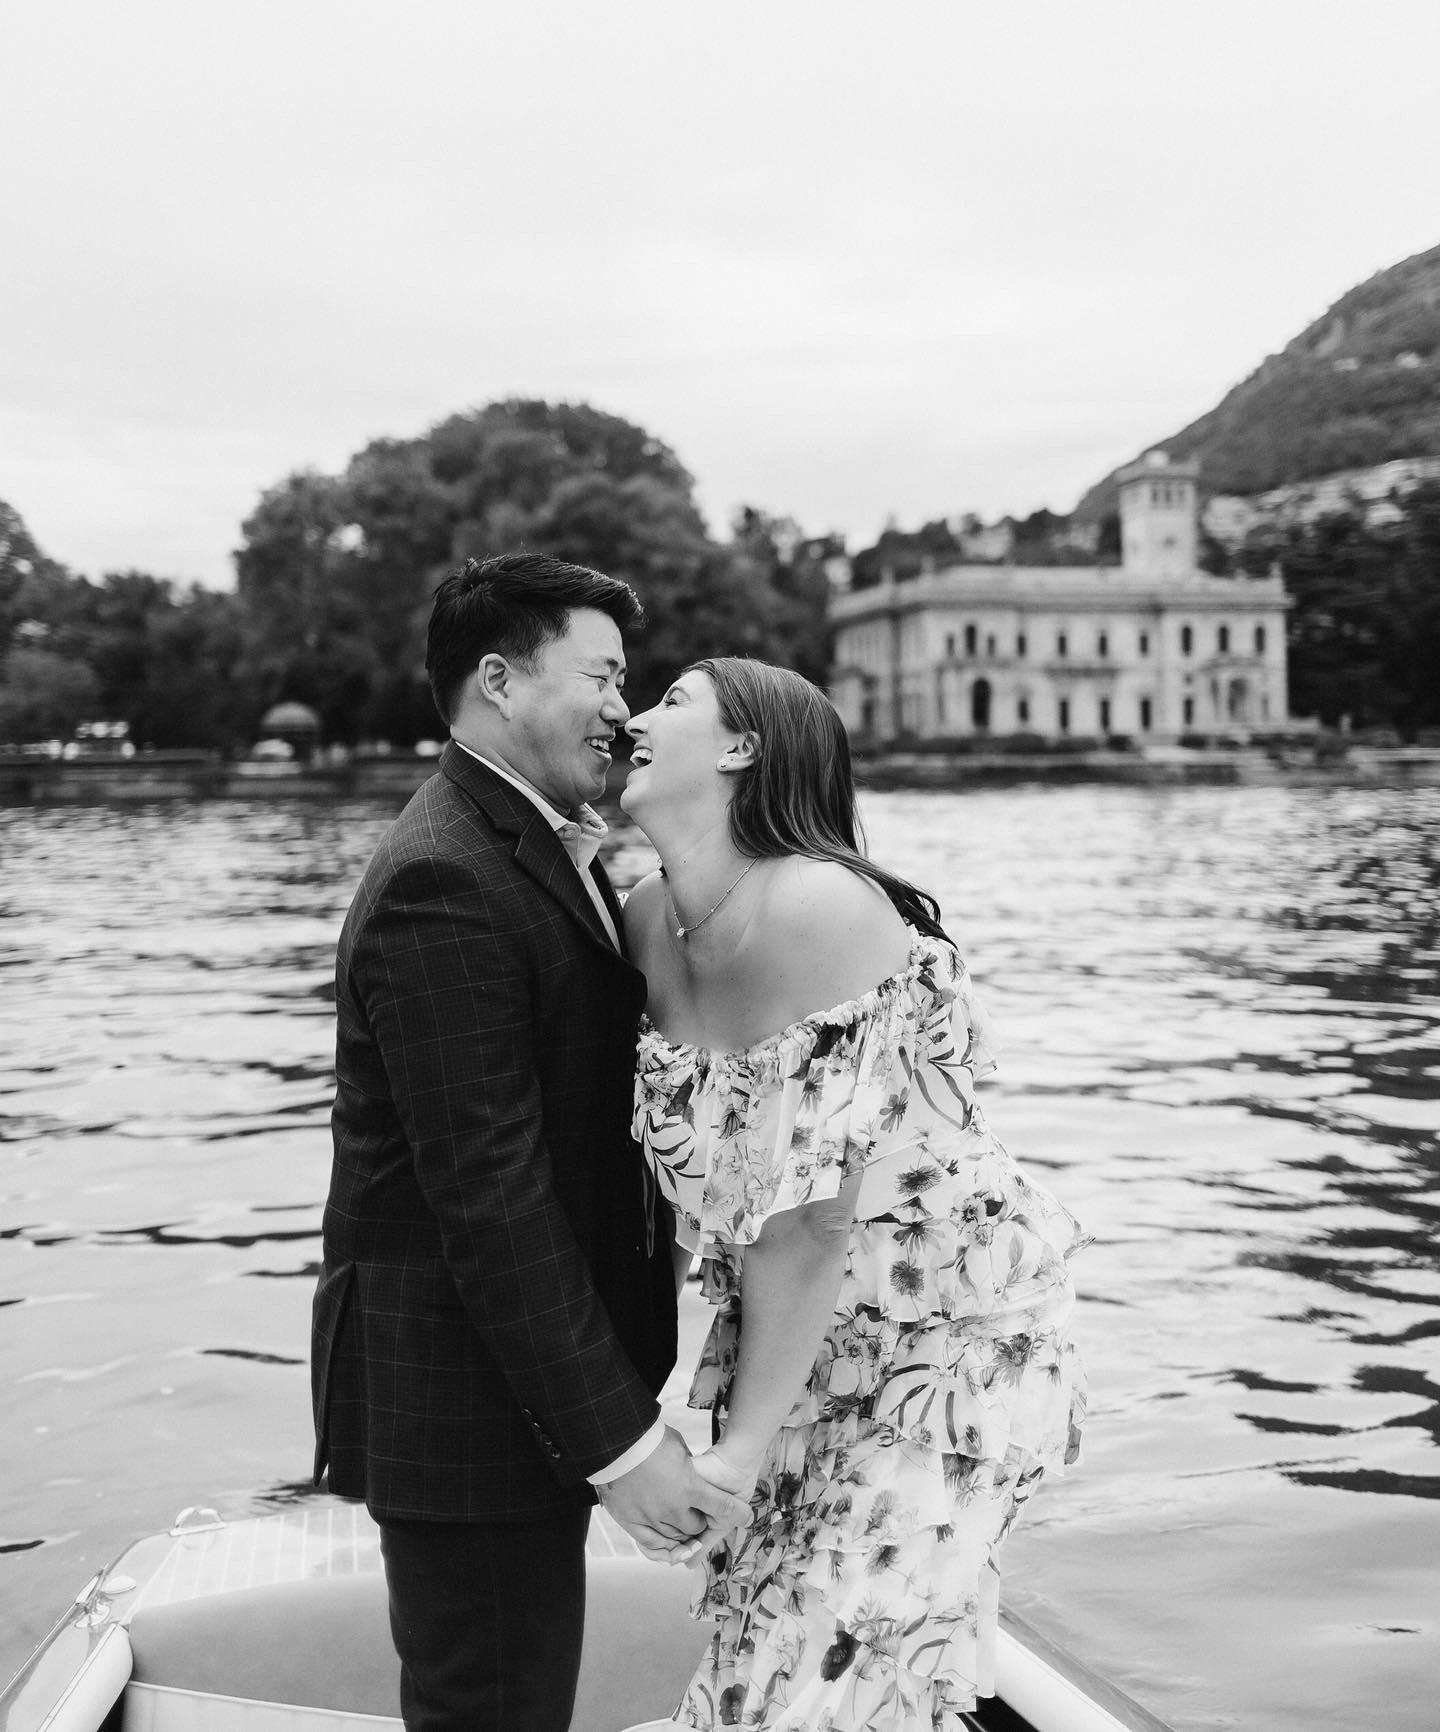 The Wedding Website of Caroline Kelly and Chris Yao